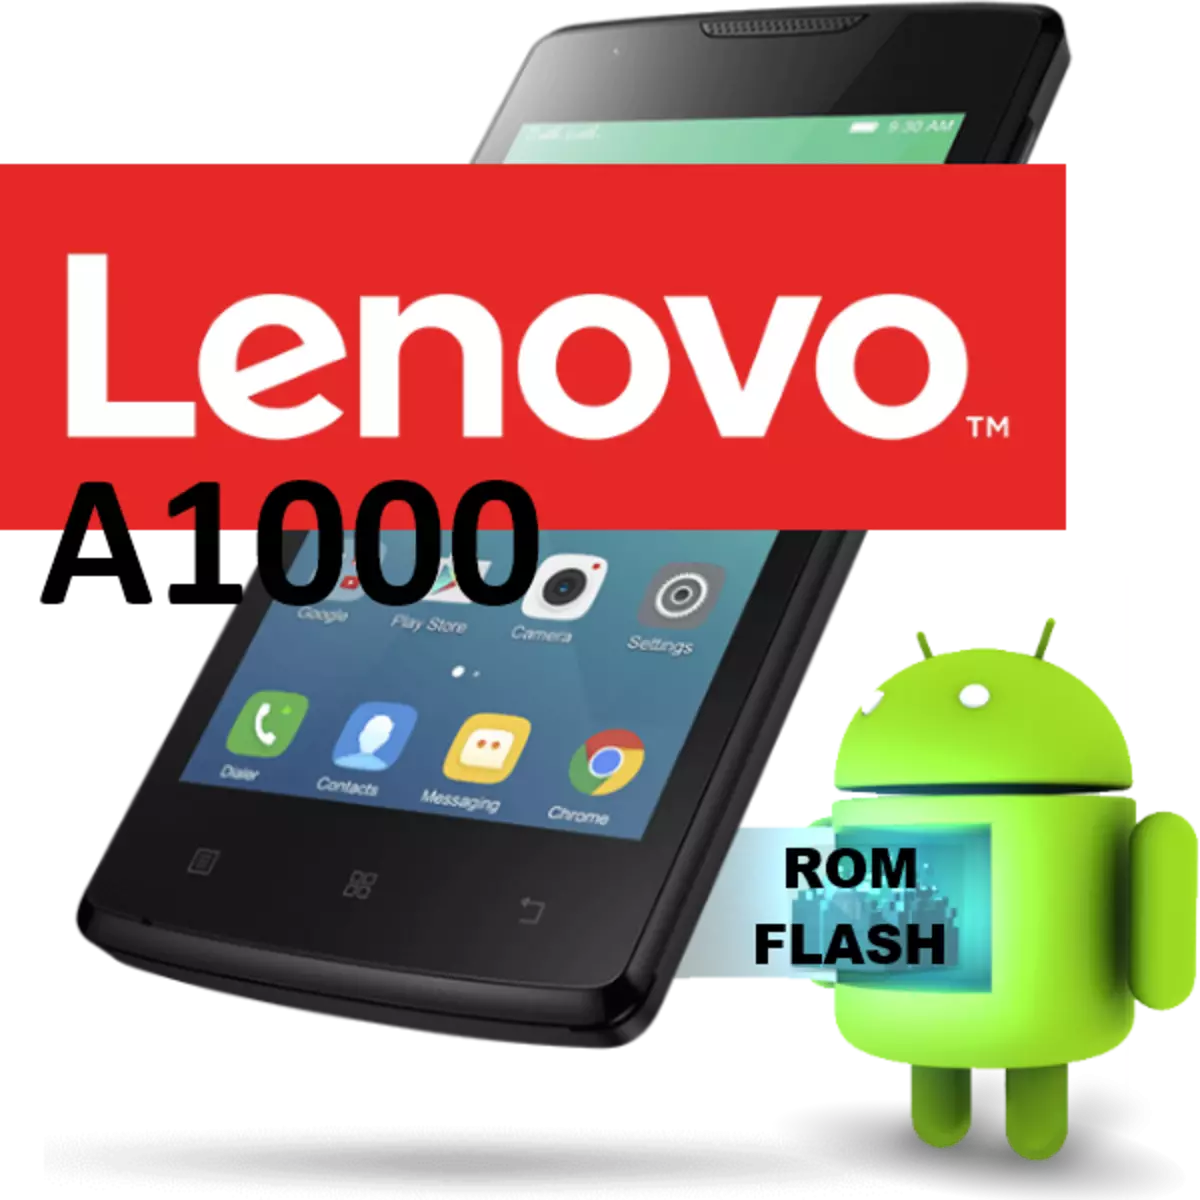 فرم ویئر Lenovo A1000.